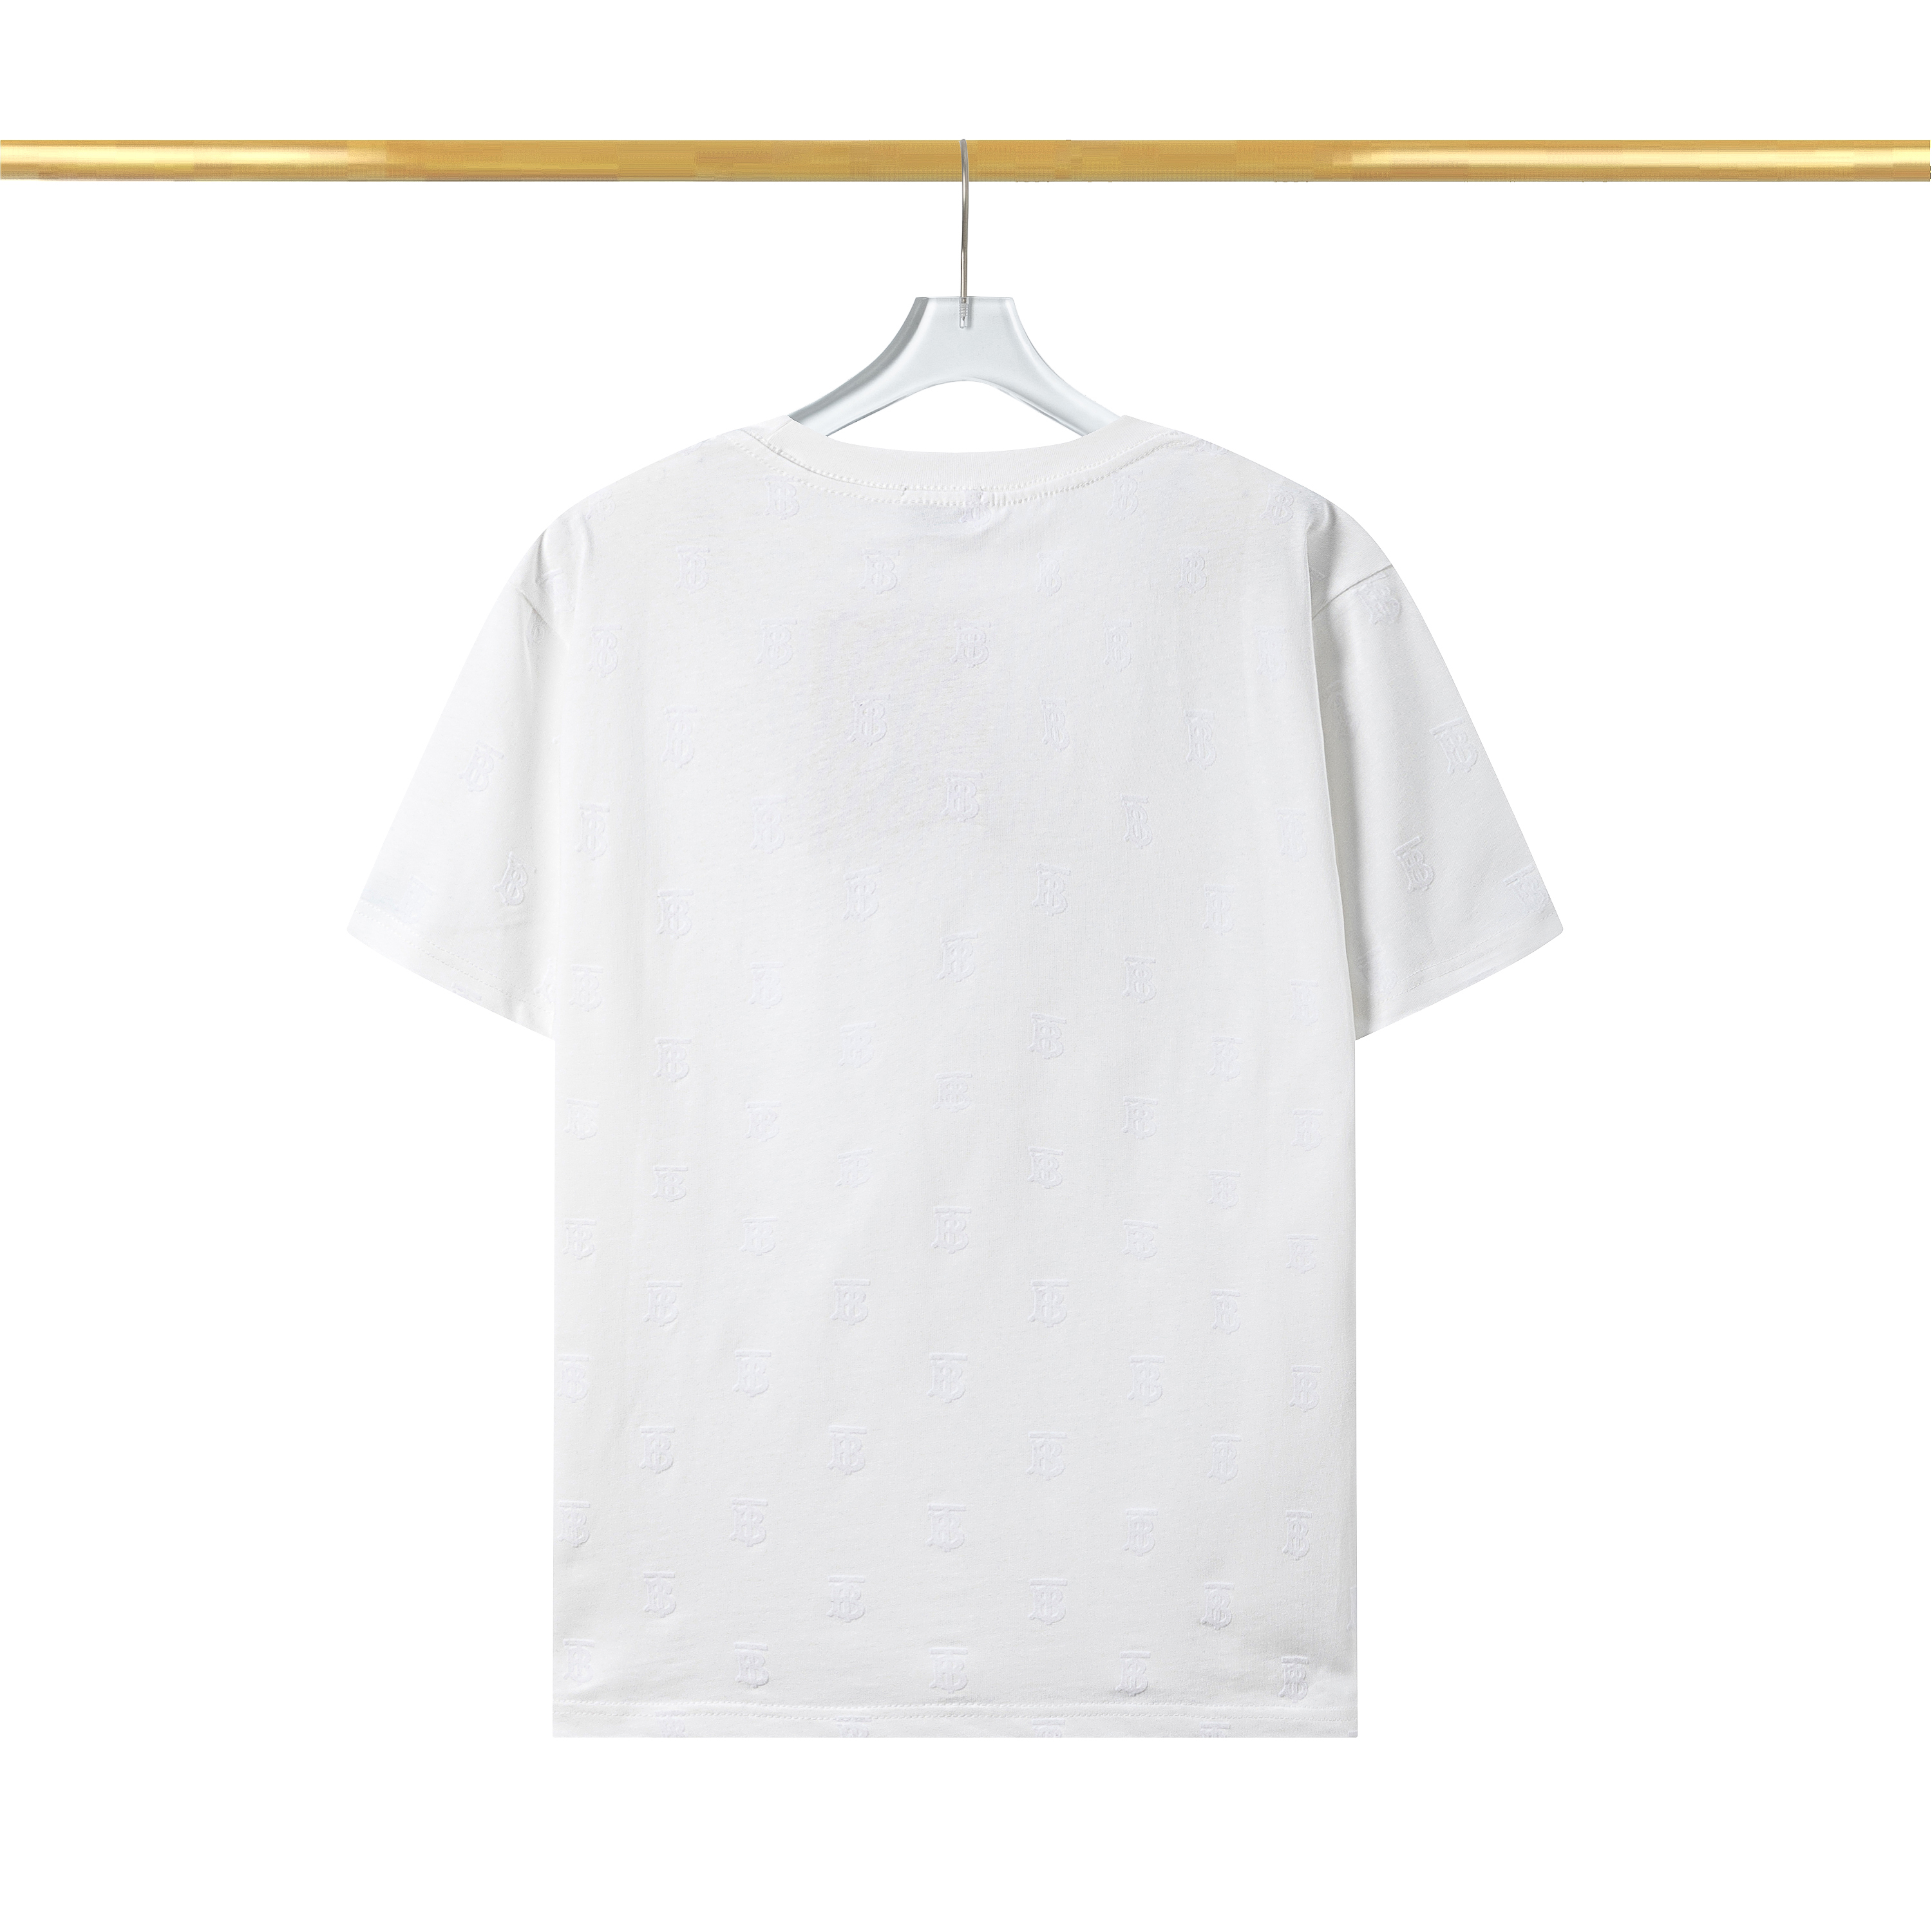 Burberry Short Sleeve T Shirts For Men # 272869, cheap Men's T shirts Short Sleeved, only $26!